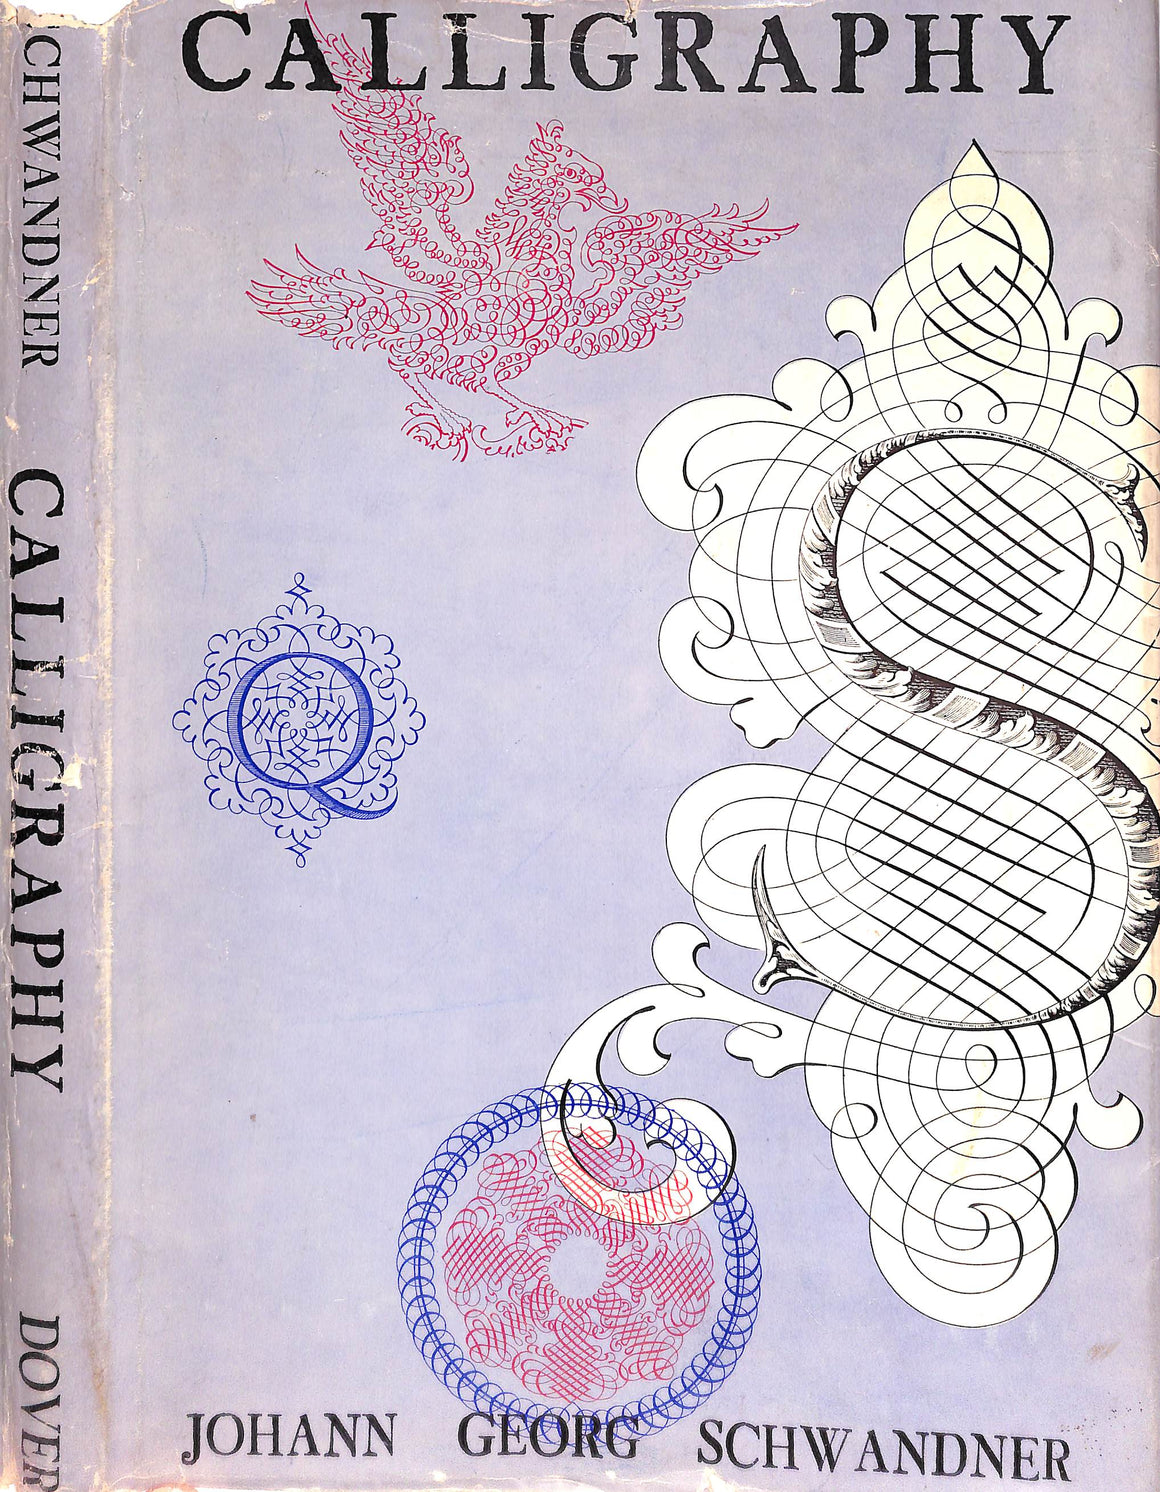 "Calligraphy" 1958 SCHWANDER, Johann Georg